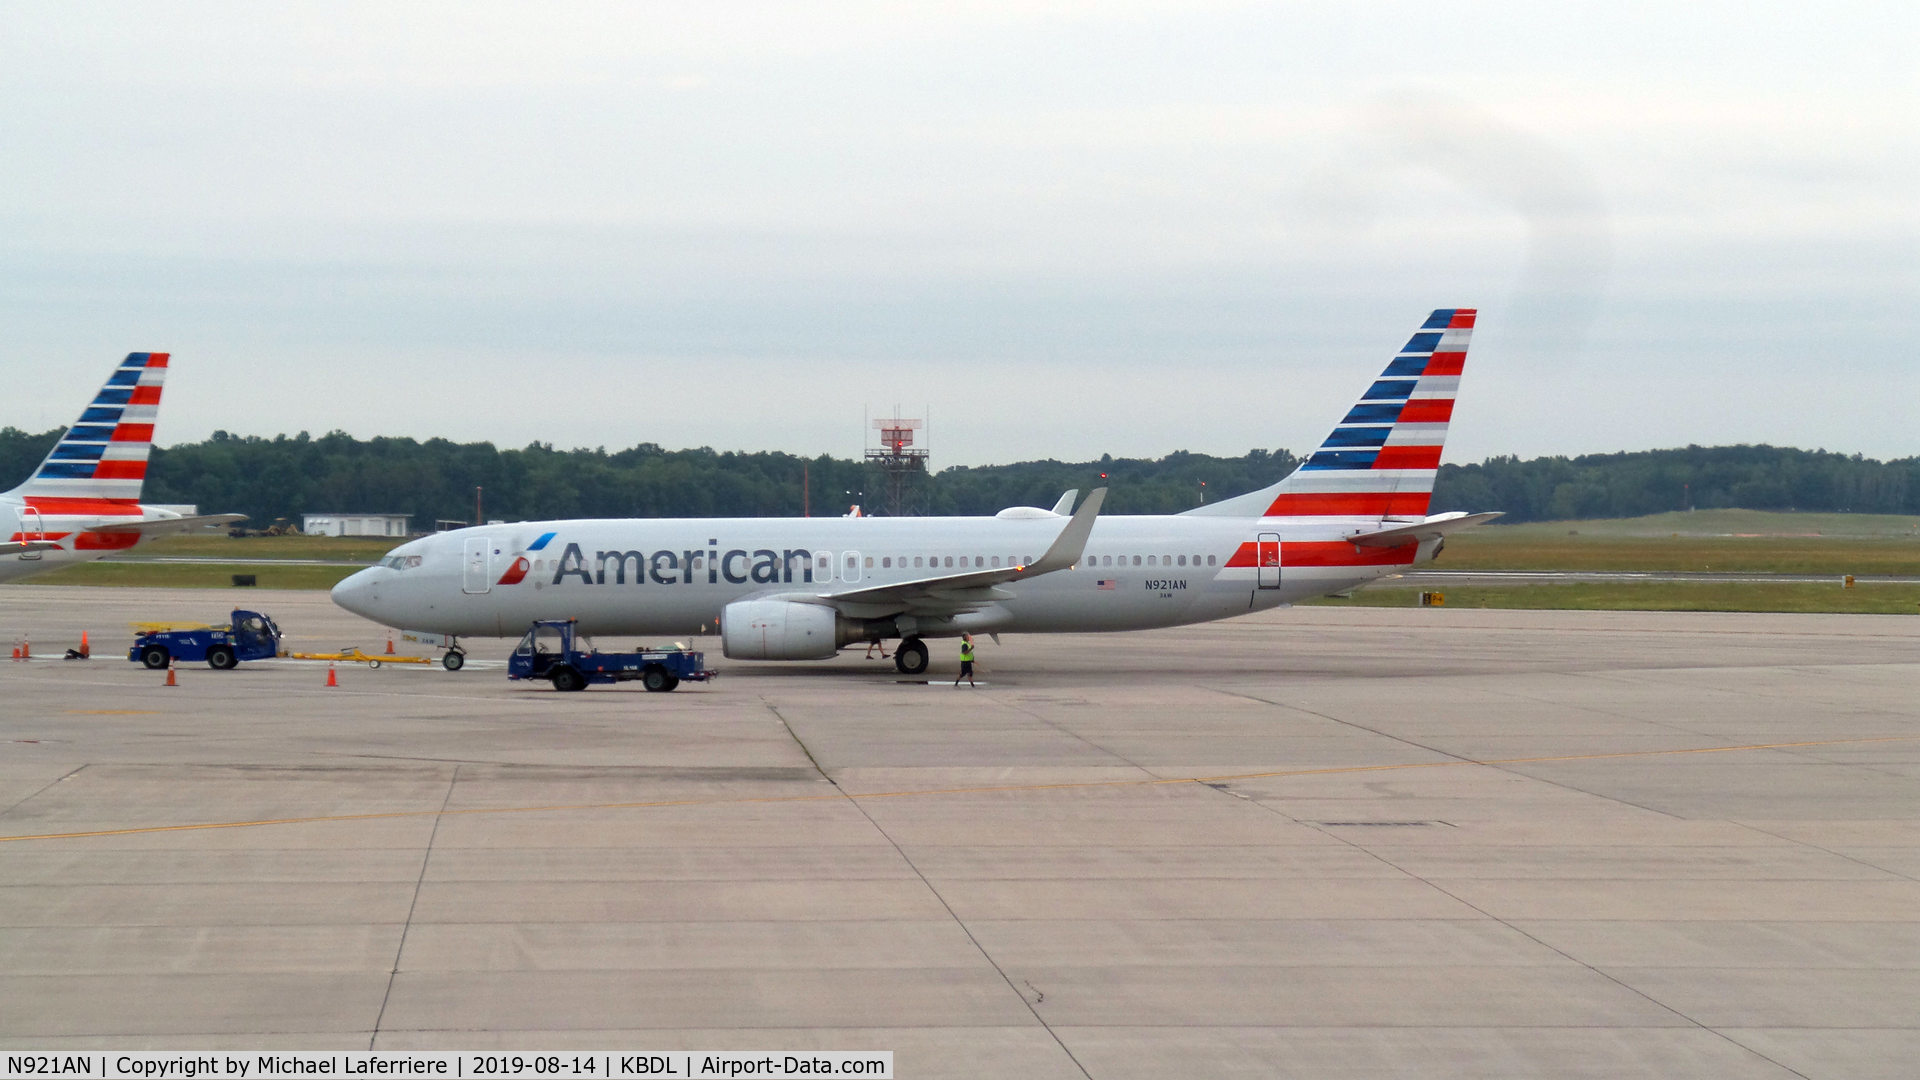 N921AN, 1999 Boeing 737-823 C/N 29522, American 737 being readied for takeoff, early AM @ Bradley airport